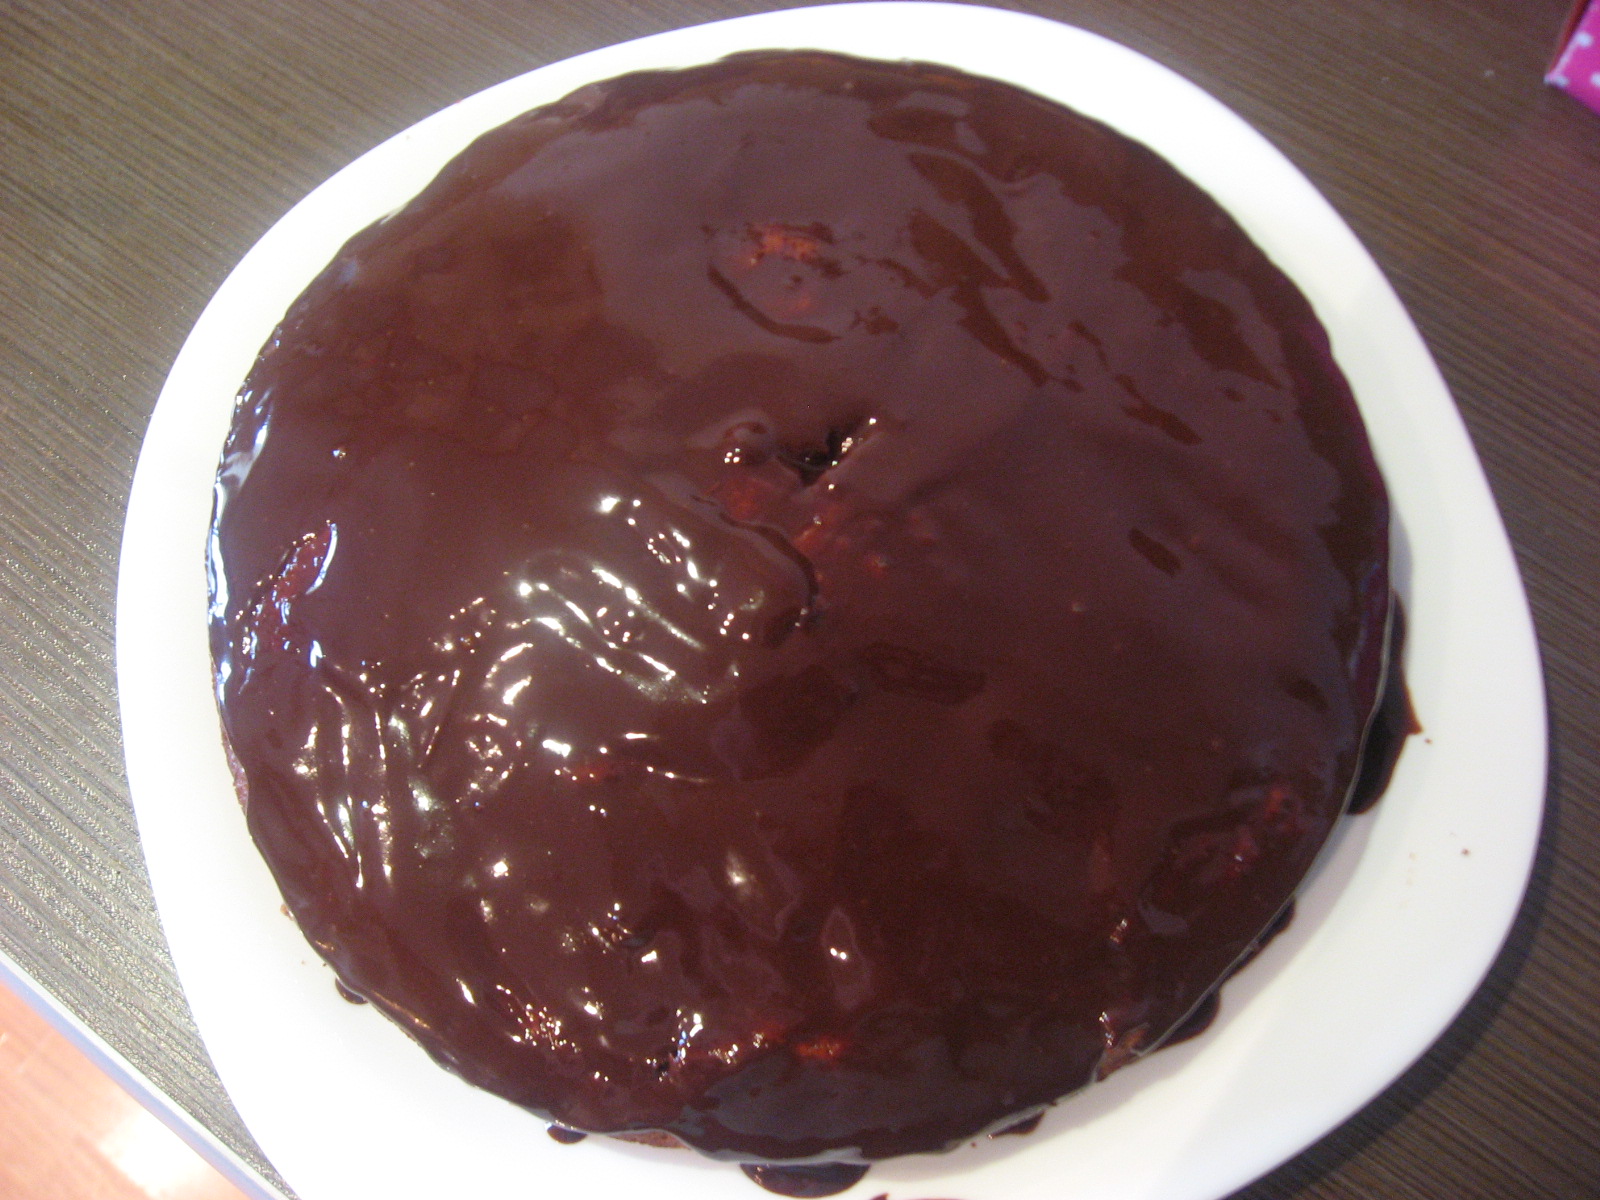 Chocolate cake by Julia Child